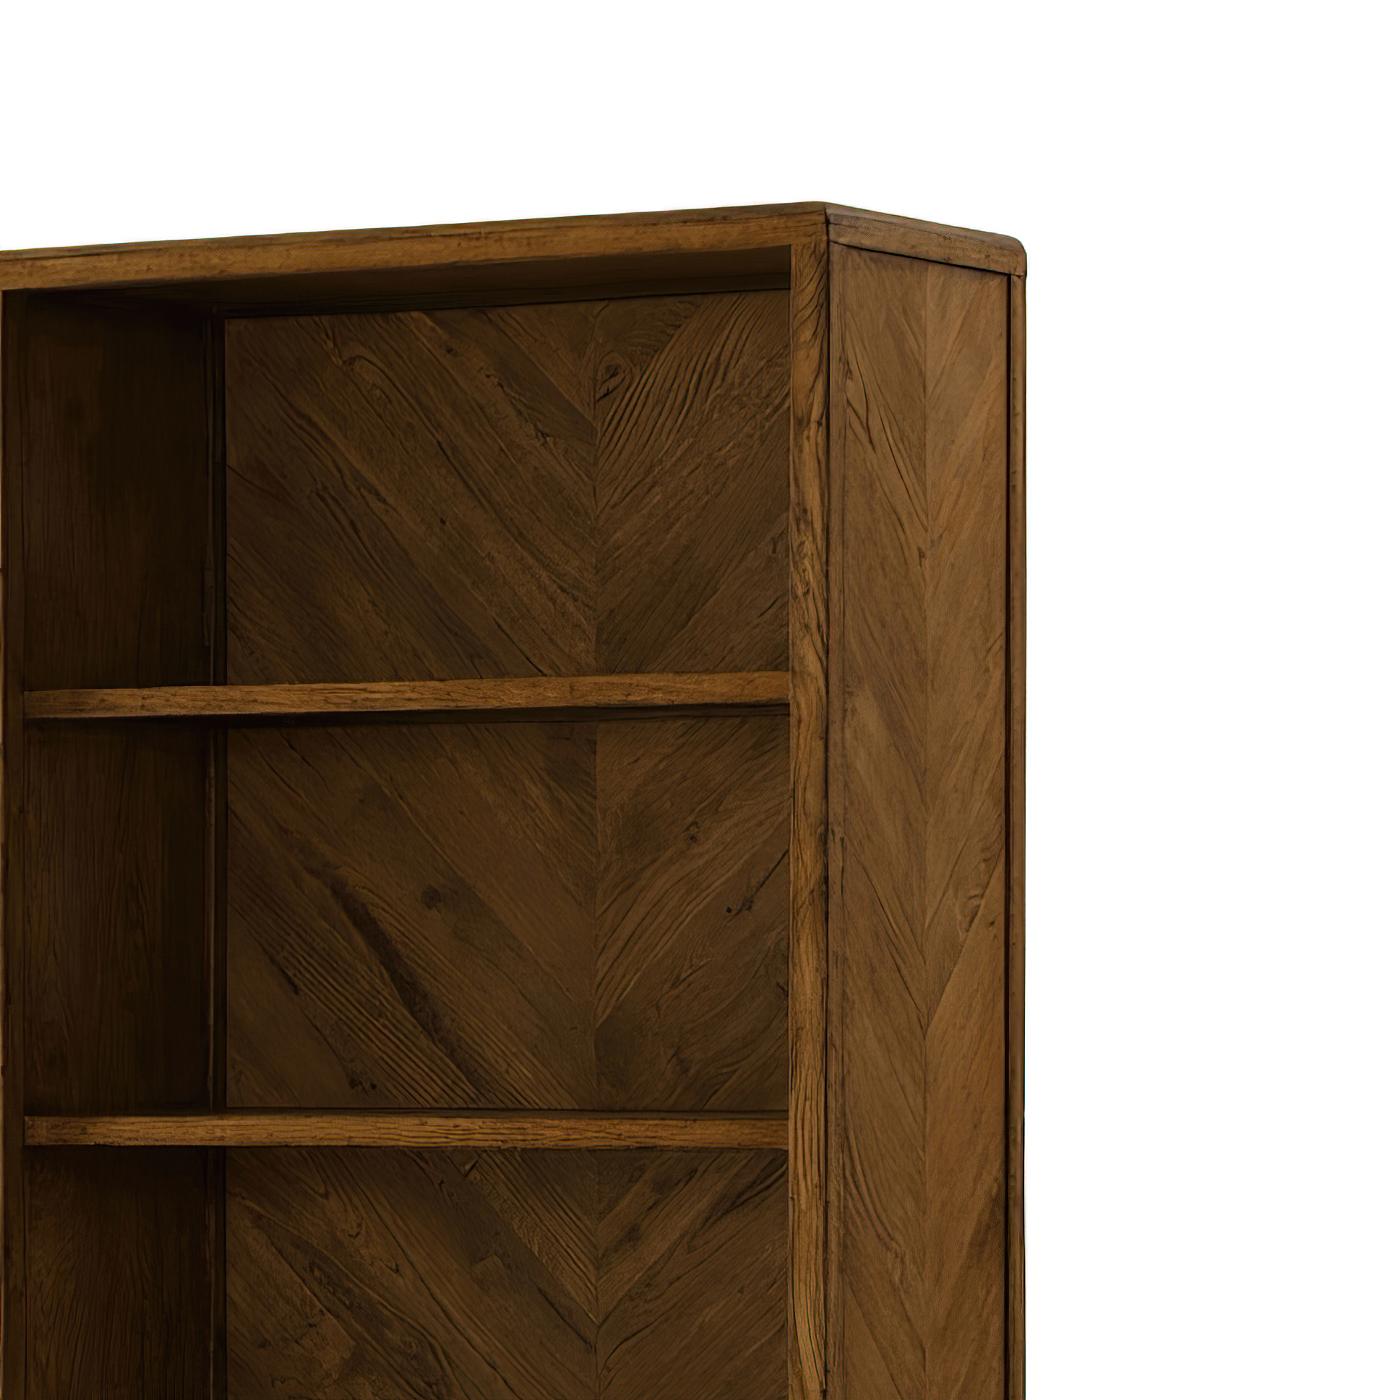 Rustic Oak Parquetry Open Bookcase For Sale